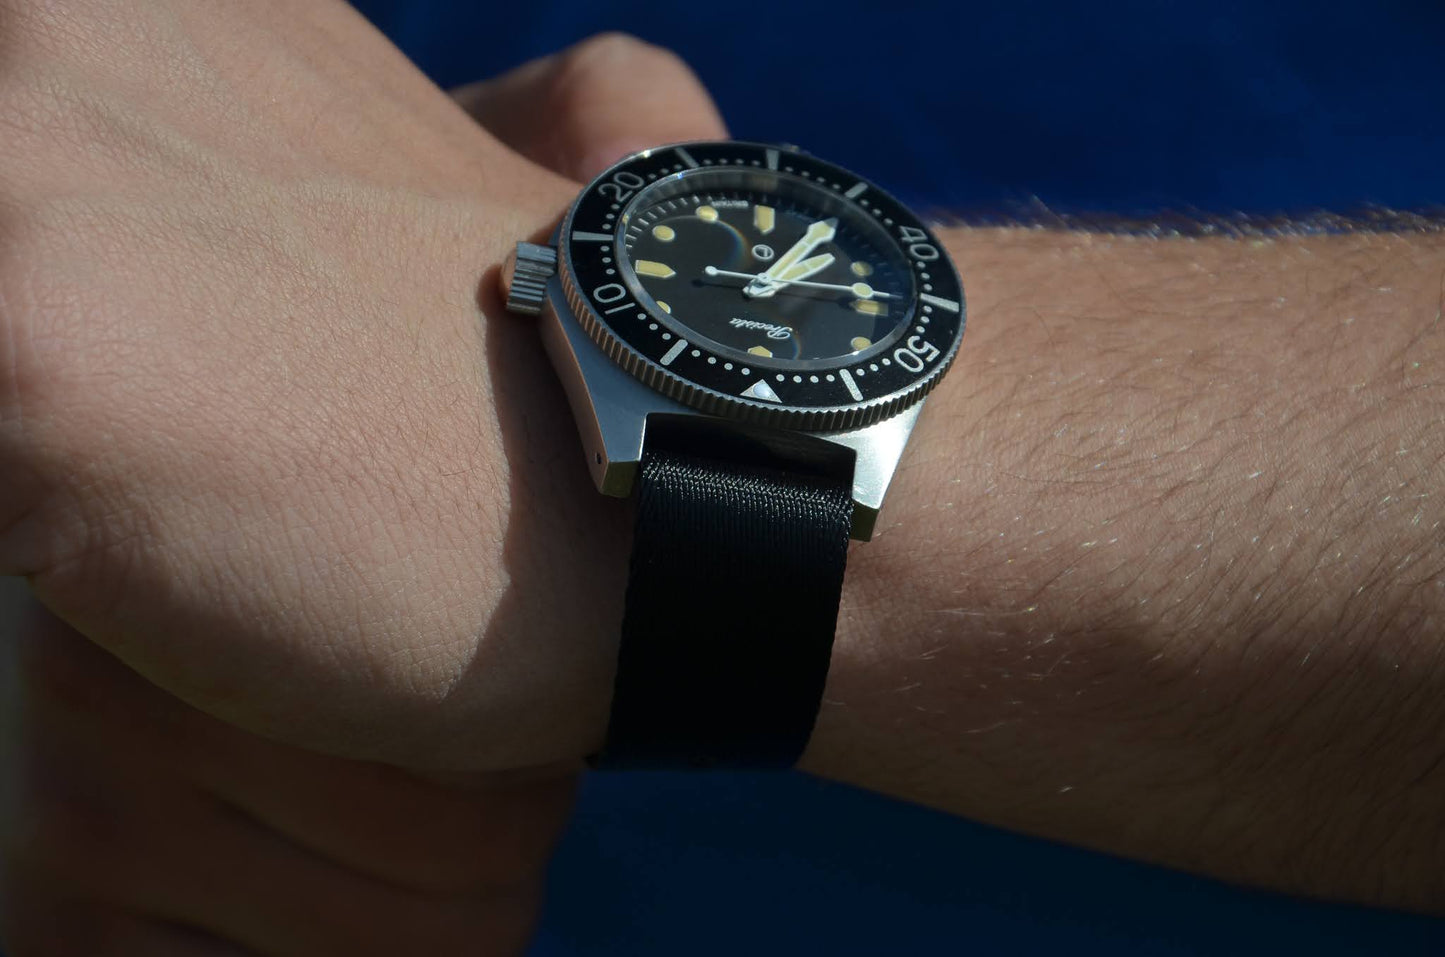 The 'Bangkok Sky' - Single pass black watch strap made of a soft seatbelt nylon